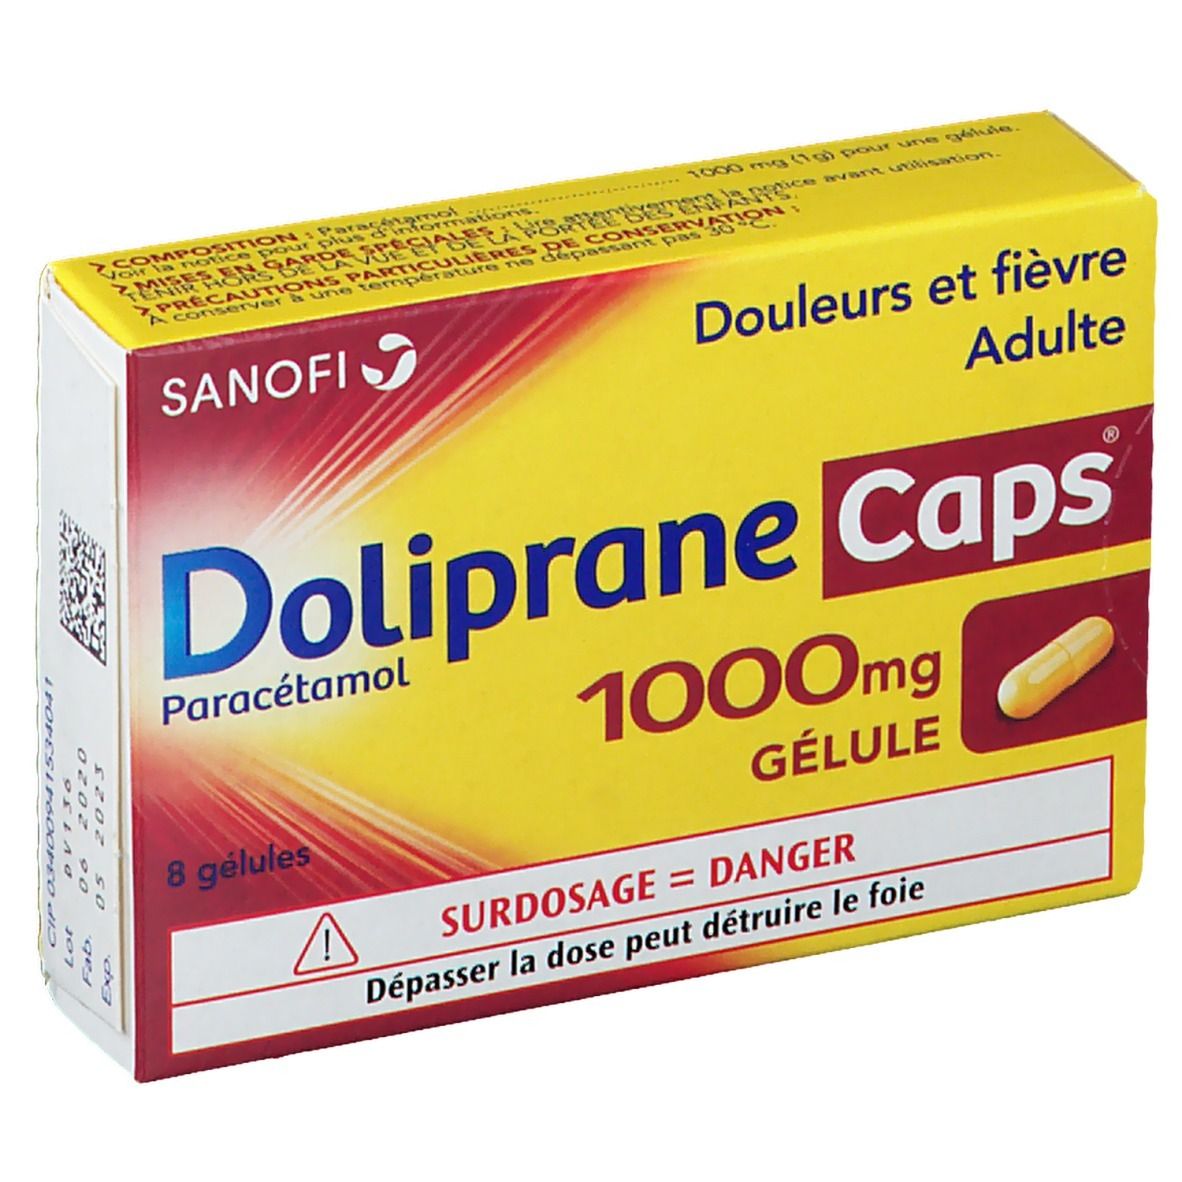 DolipraneCaps® 1000 mg